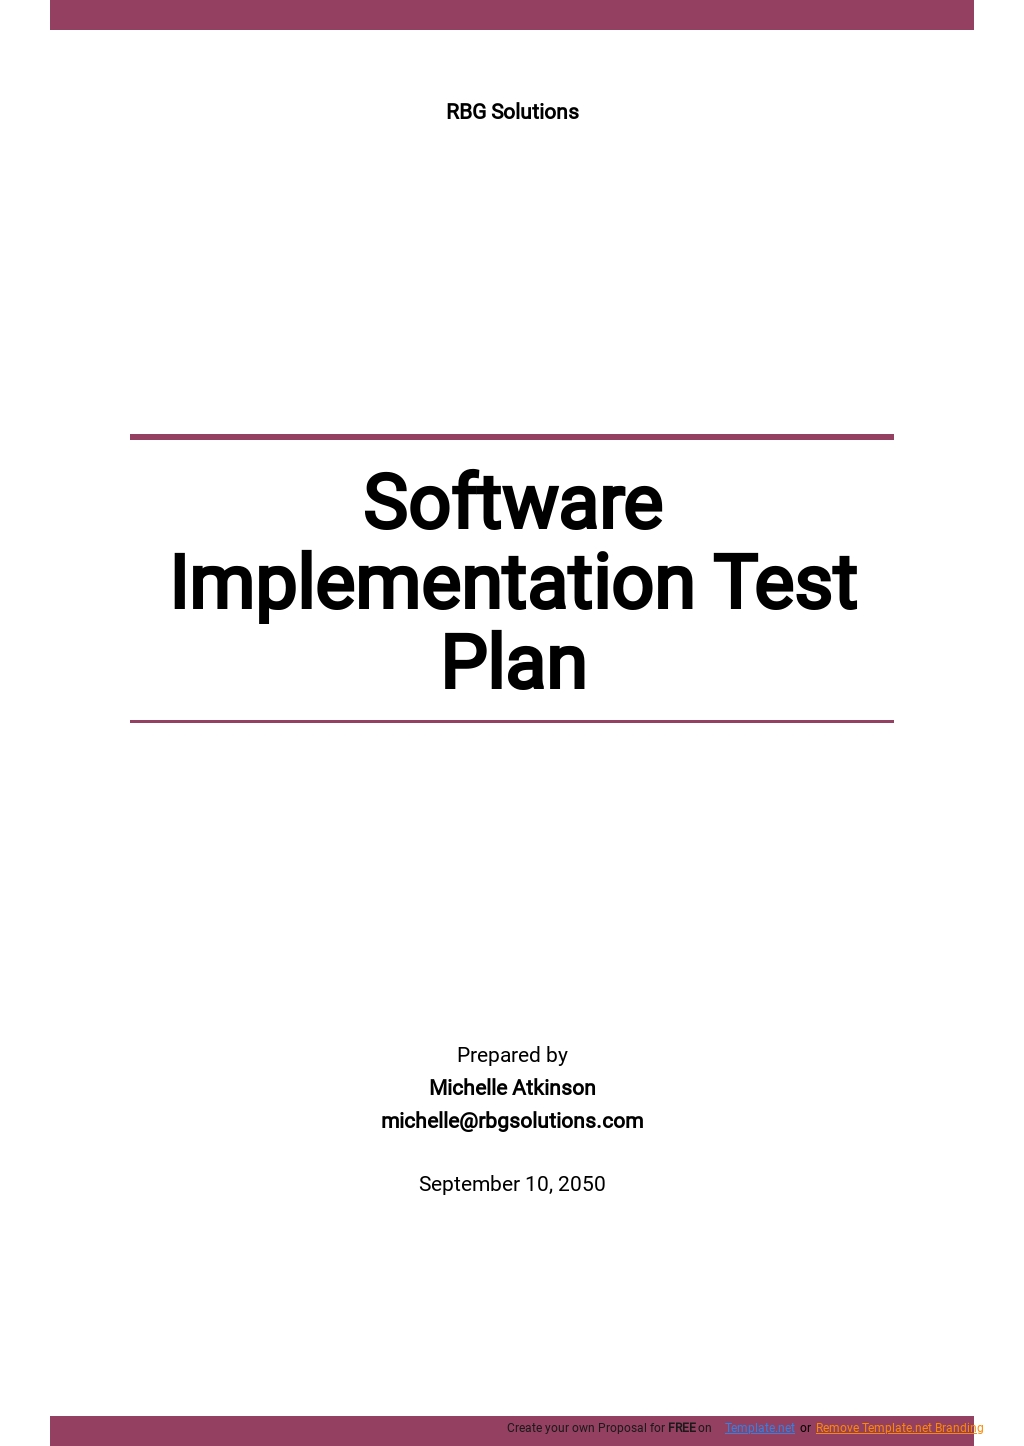 Software Implementation Test Plan Template.jpe